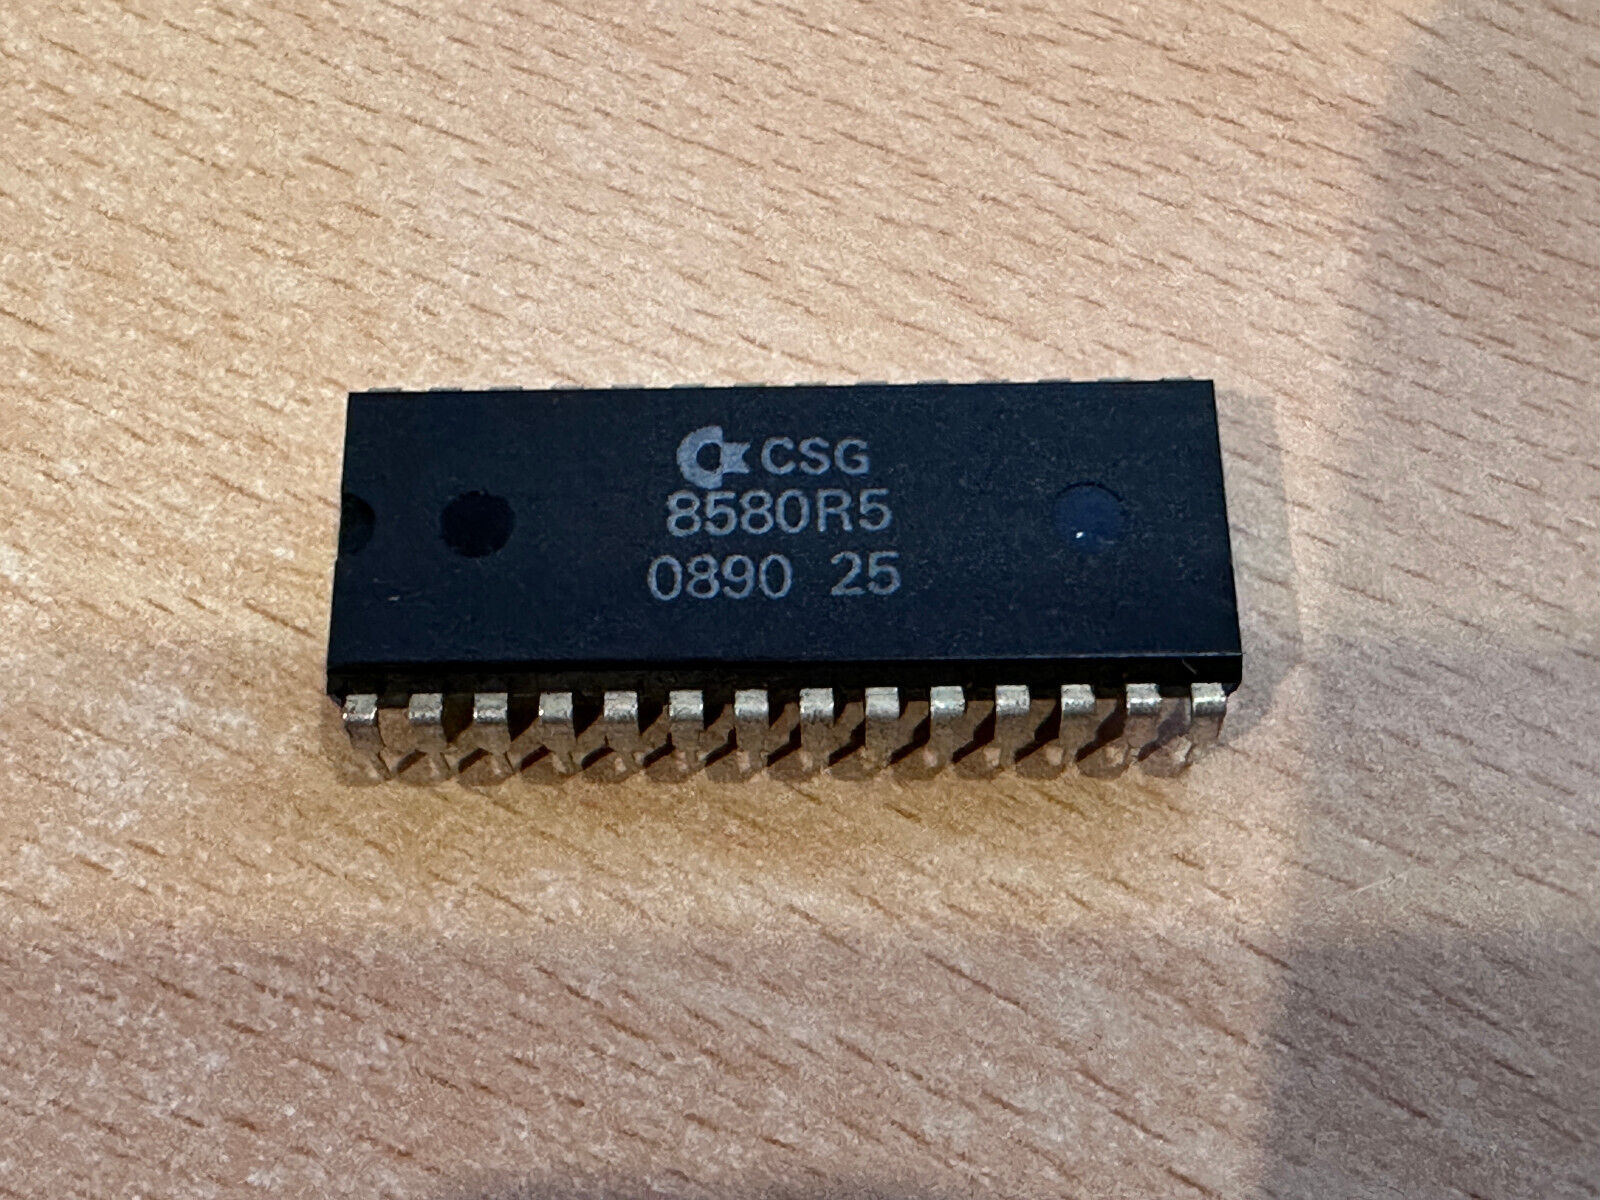 8580R5 Chip Ic Csg / Mos Sid Soundchip, Commodore C64 #08 90